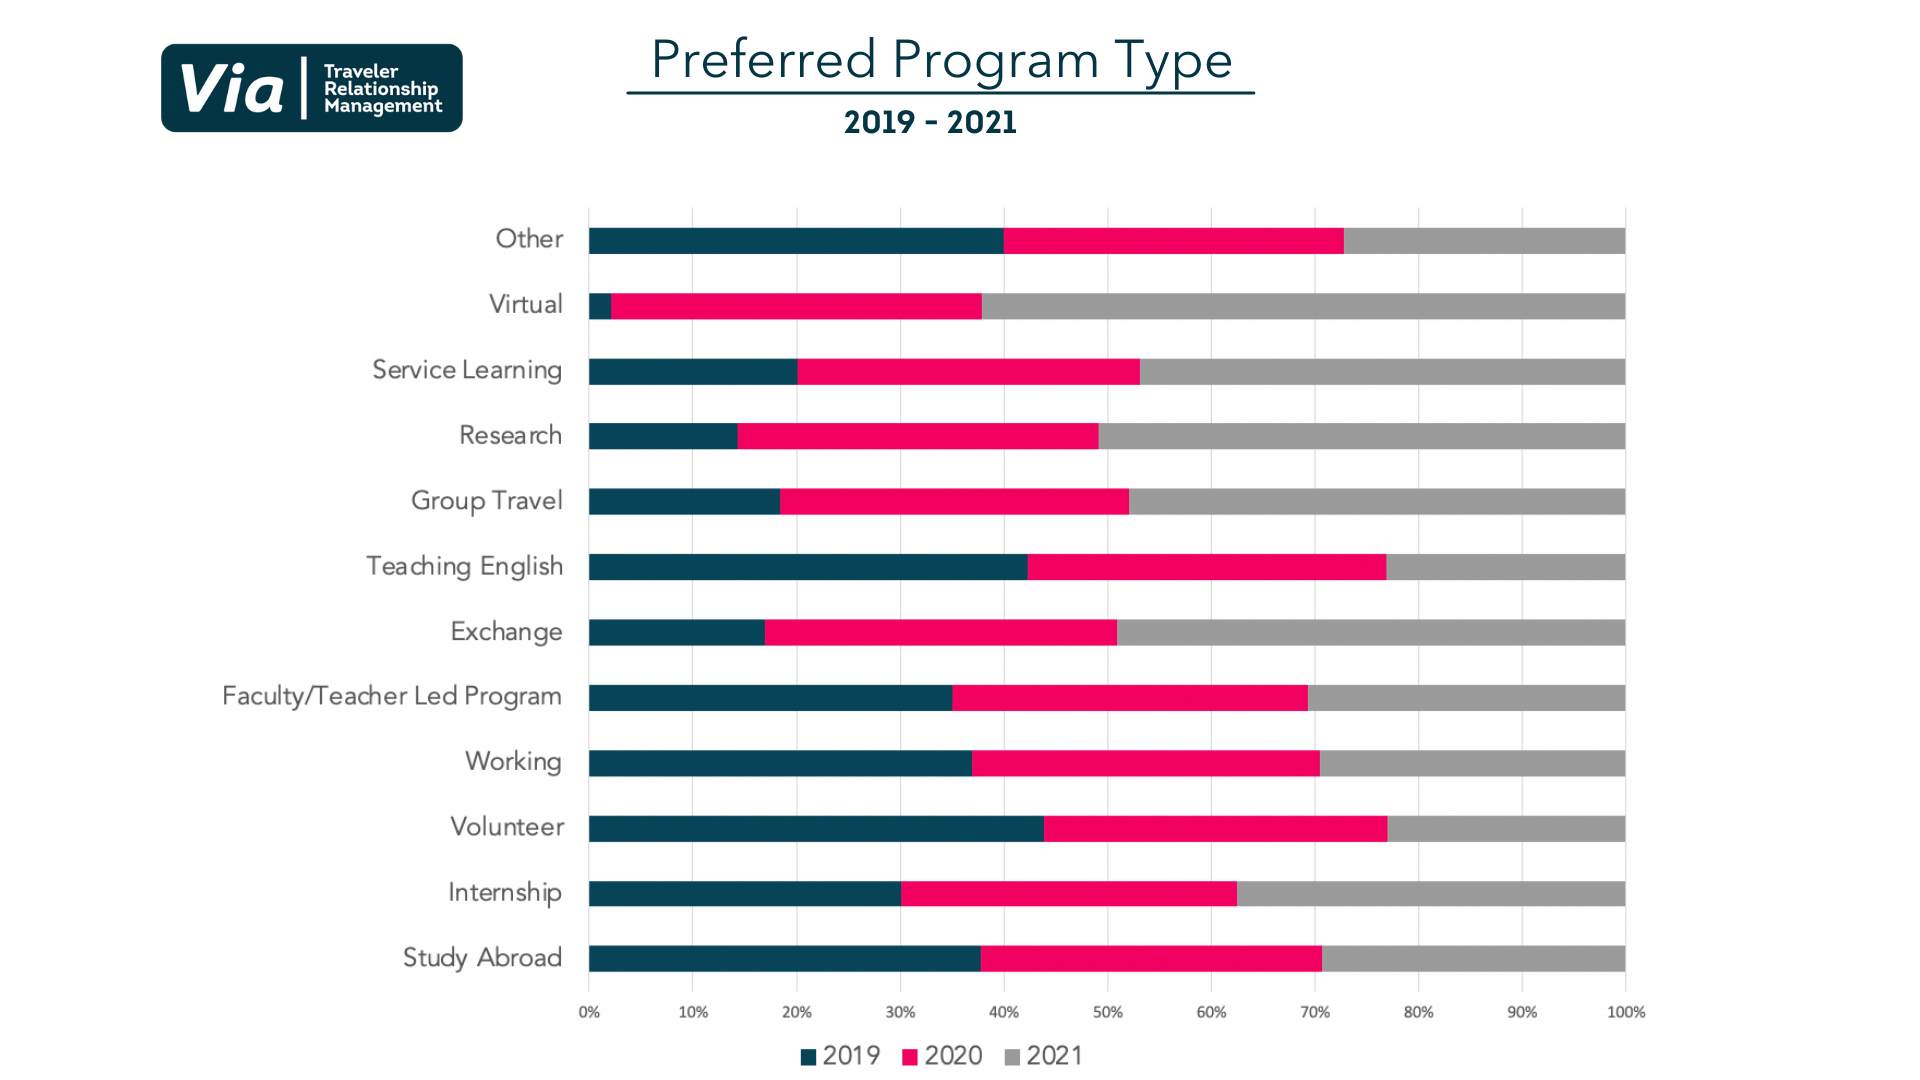 Preferred Program Type 